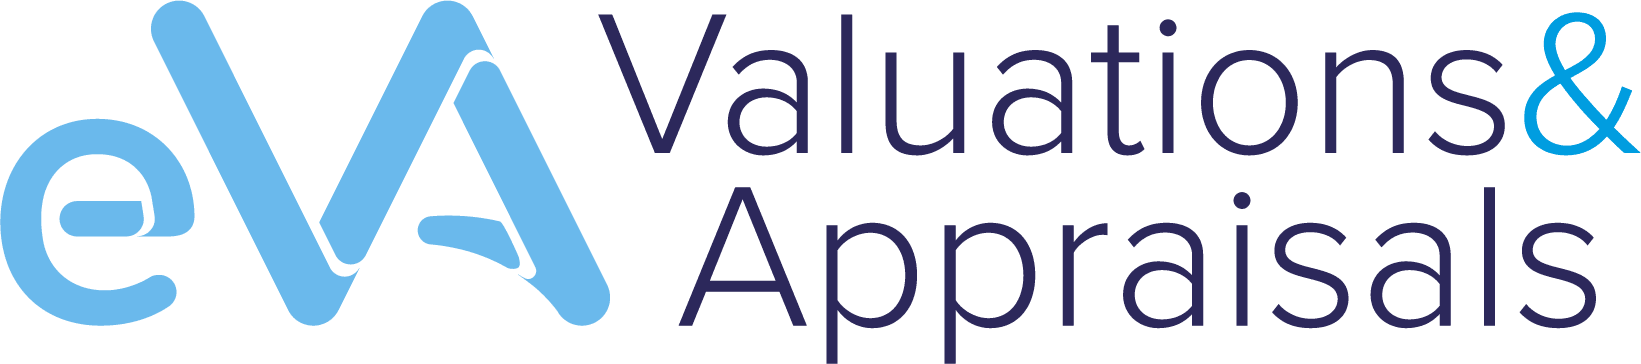 eVA Valutations & Appraisals